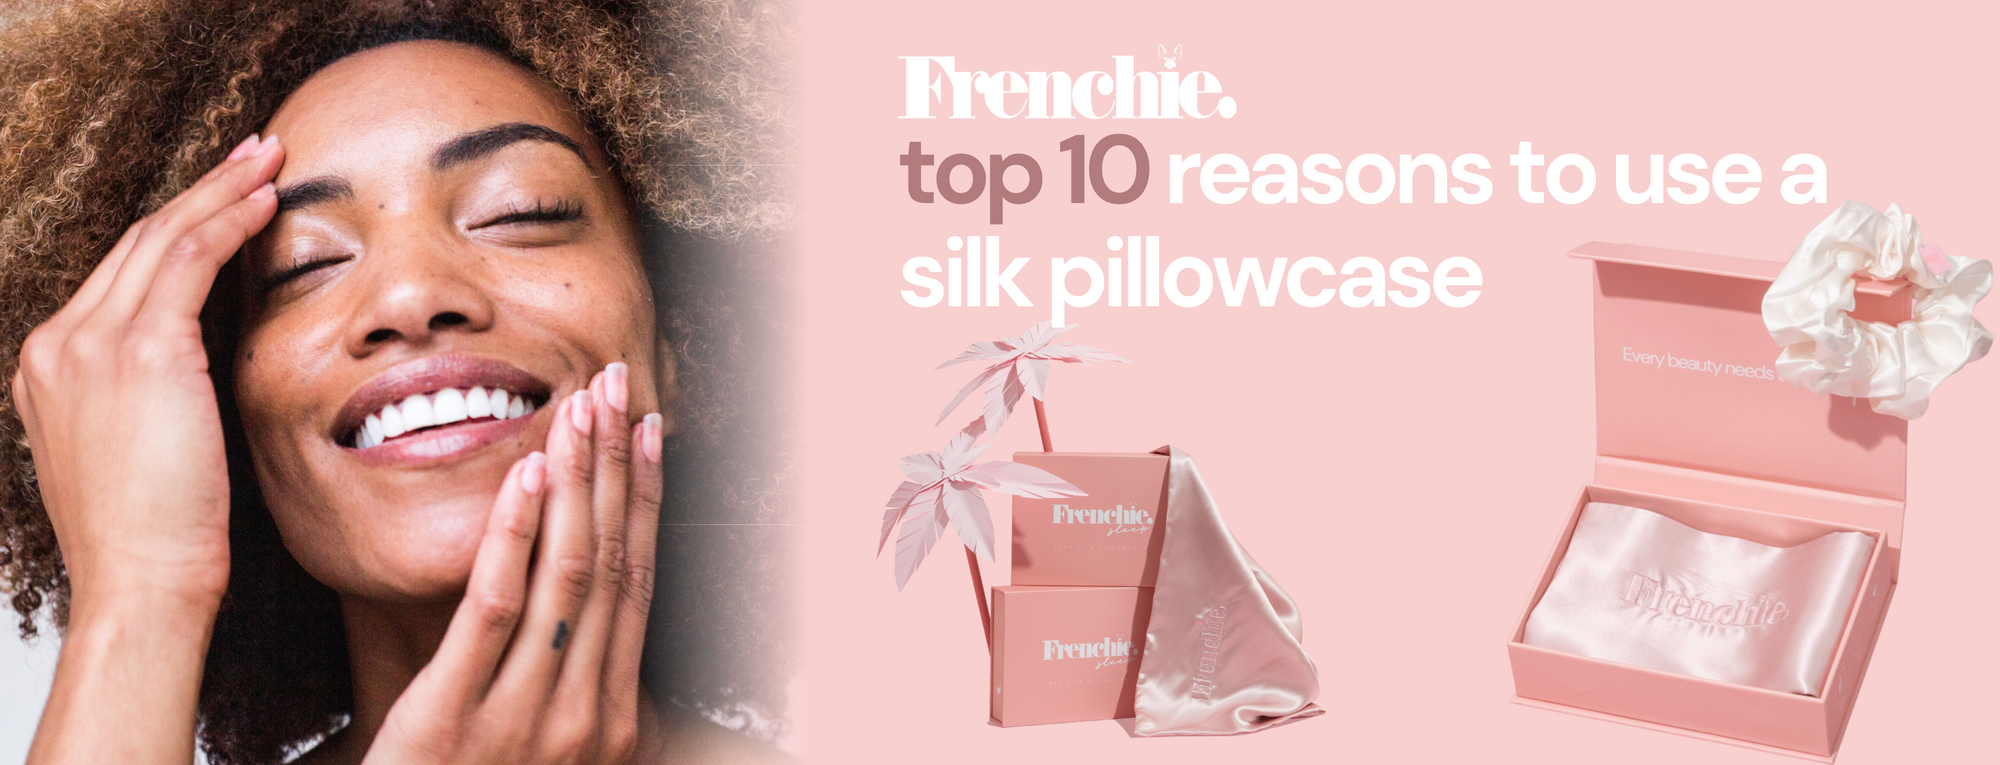 Top 10 reasons to use a silk pillowcase